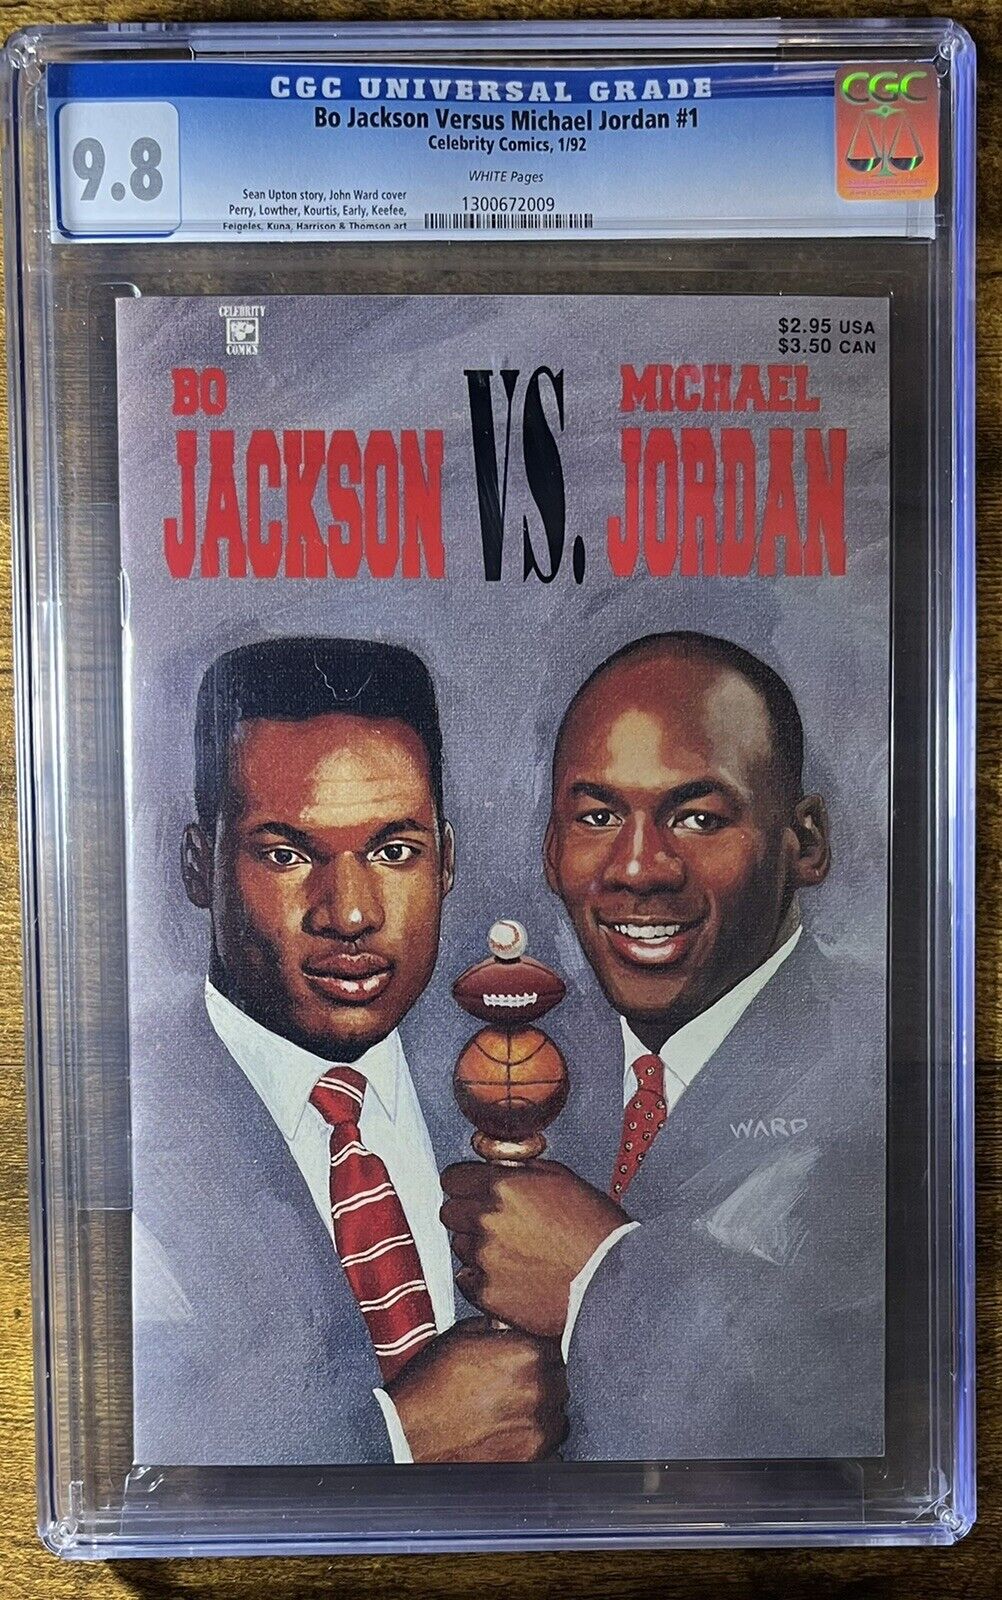 BO JACKSON VS MICHAEL JORDAN 1 CGC 9.8 HOF SUPERSTARS CELEBRITY COMICS 1992